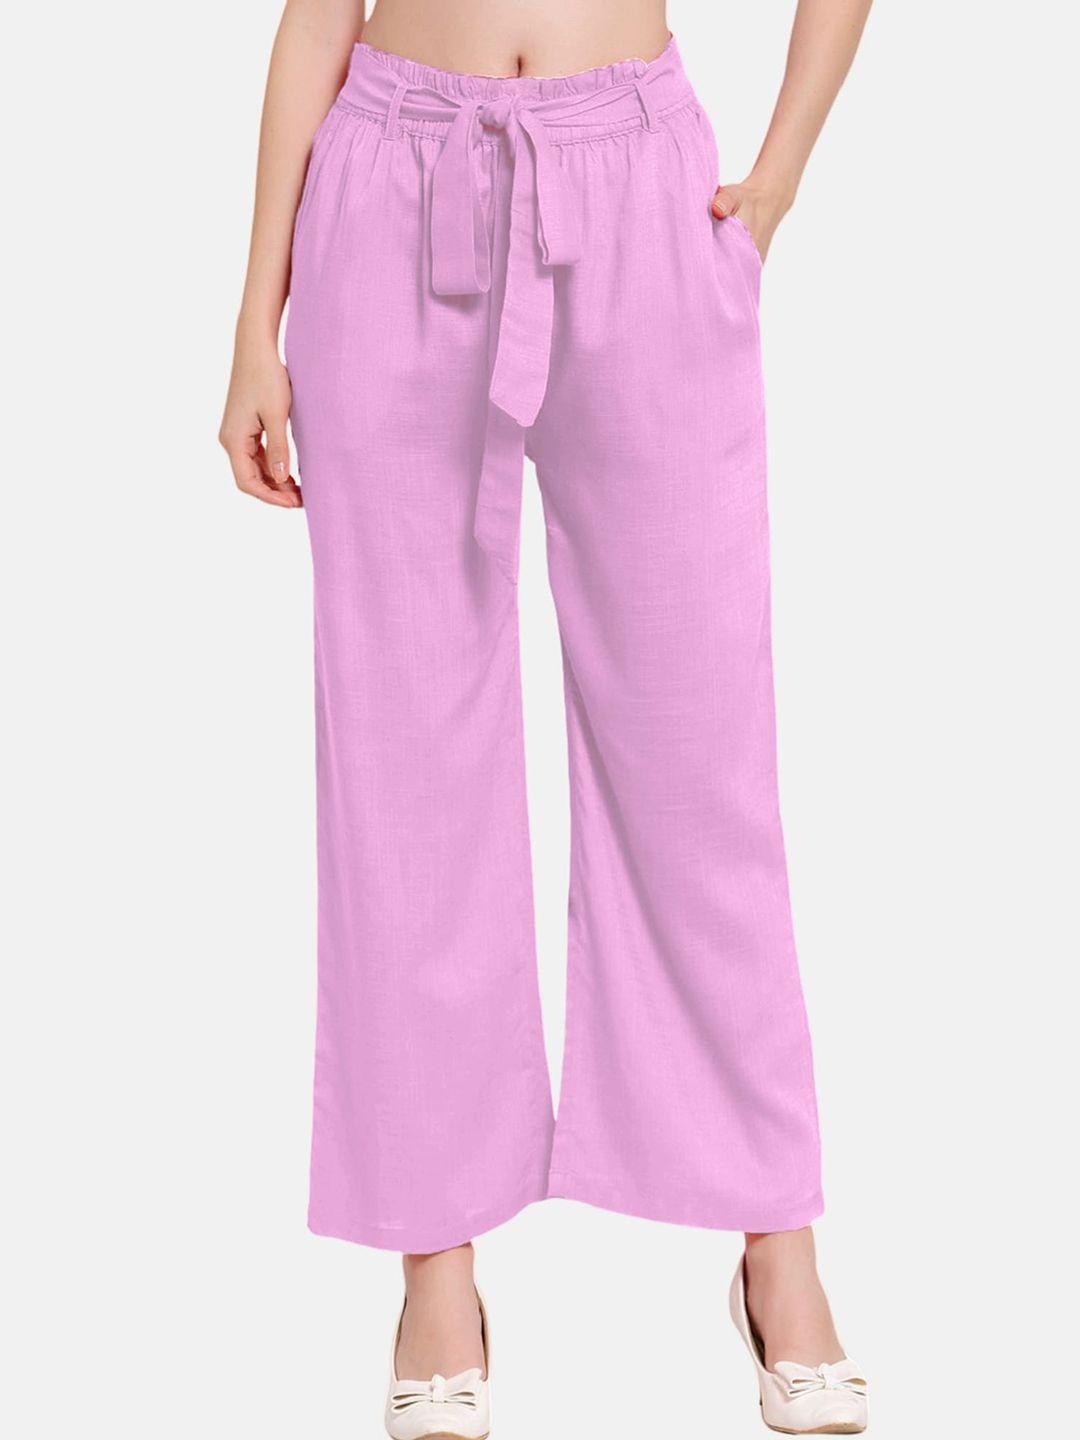 patrorna women pink smart loose fit cotton trousers